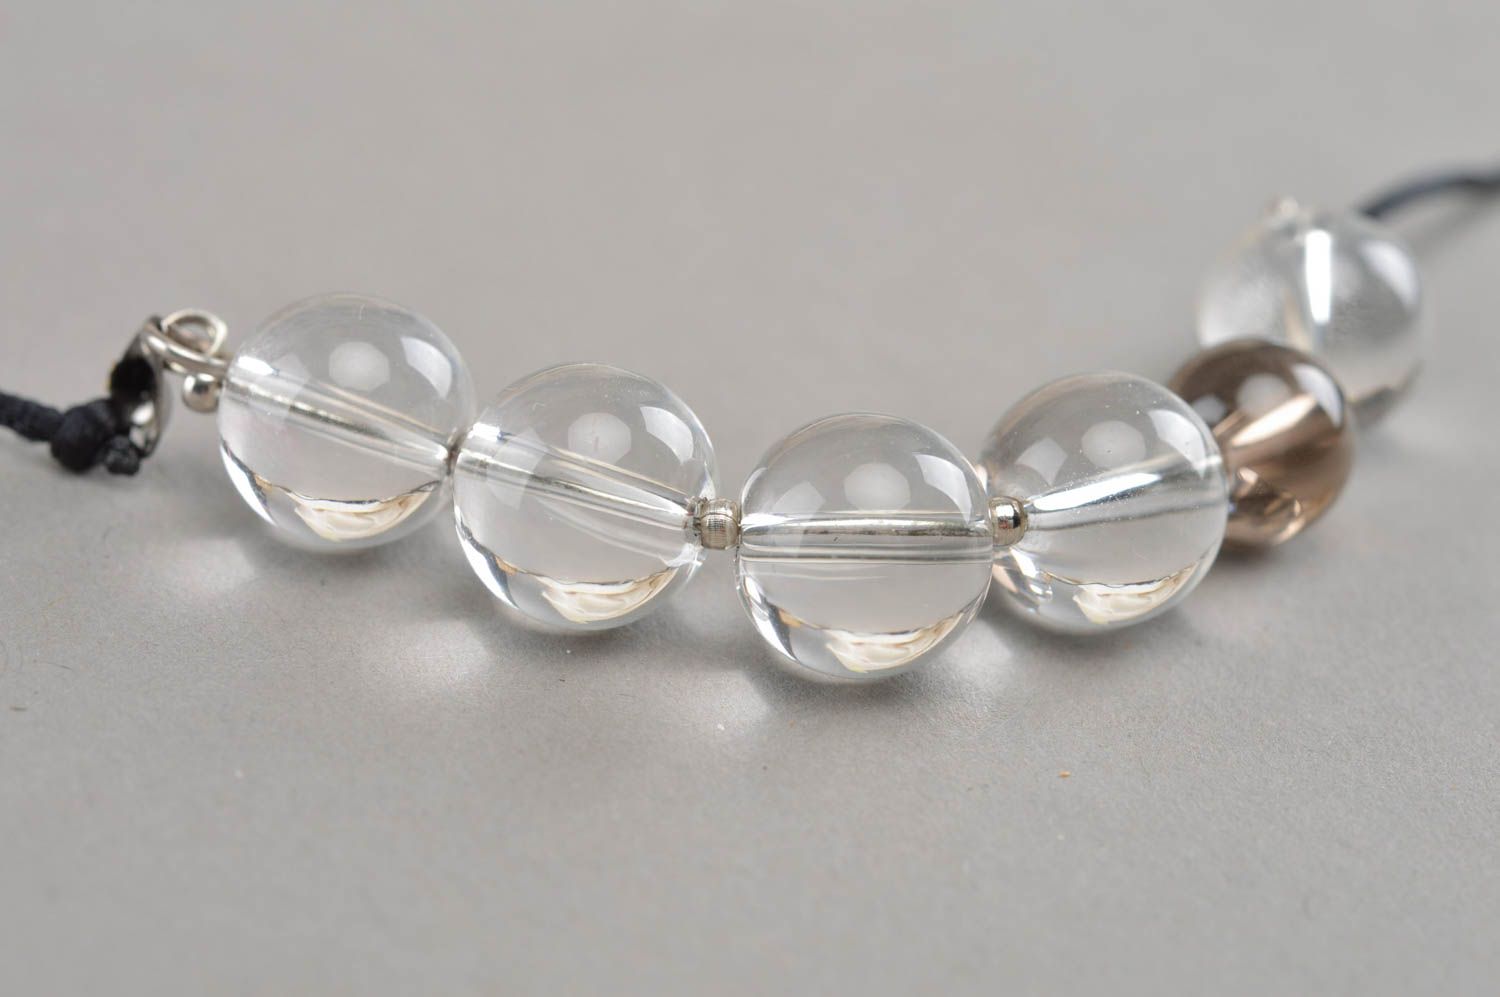 Handmade quartz necklace jewelry made of natural stones stylish accessory photo 5